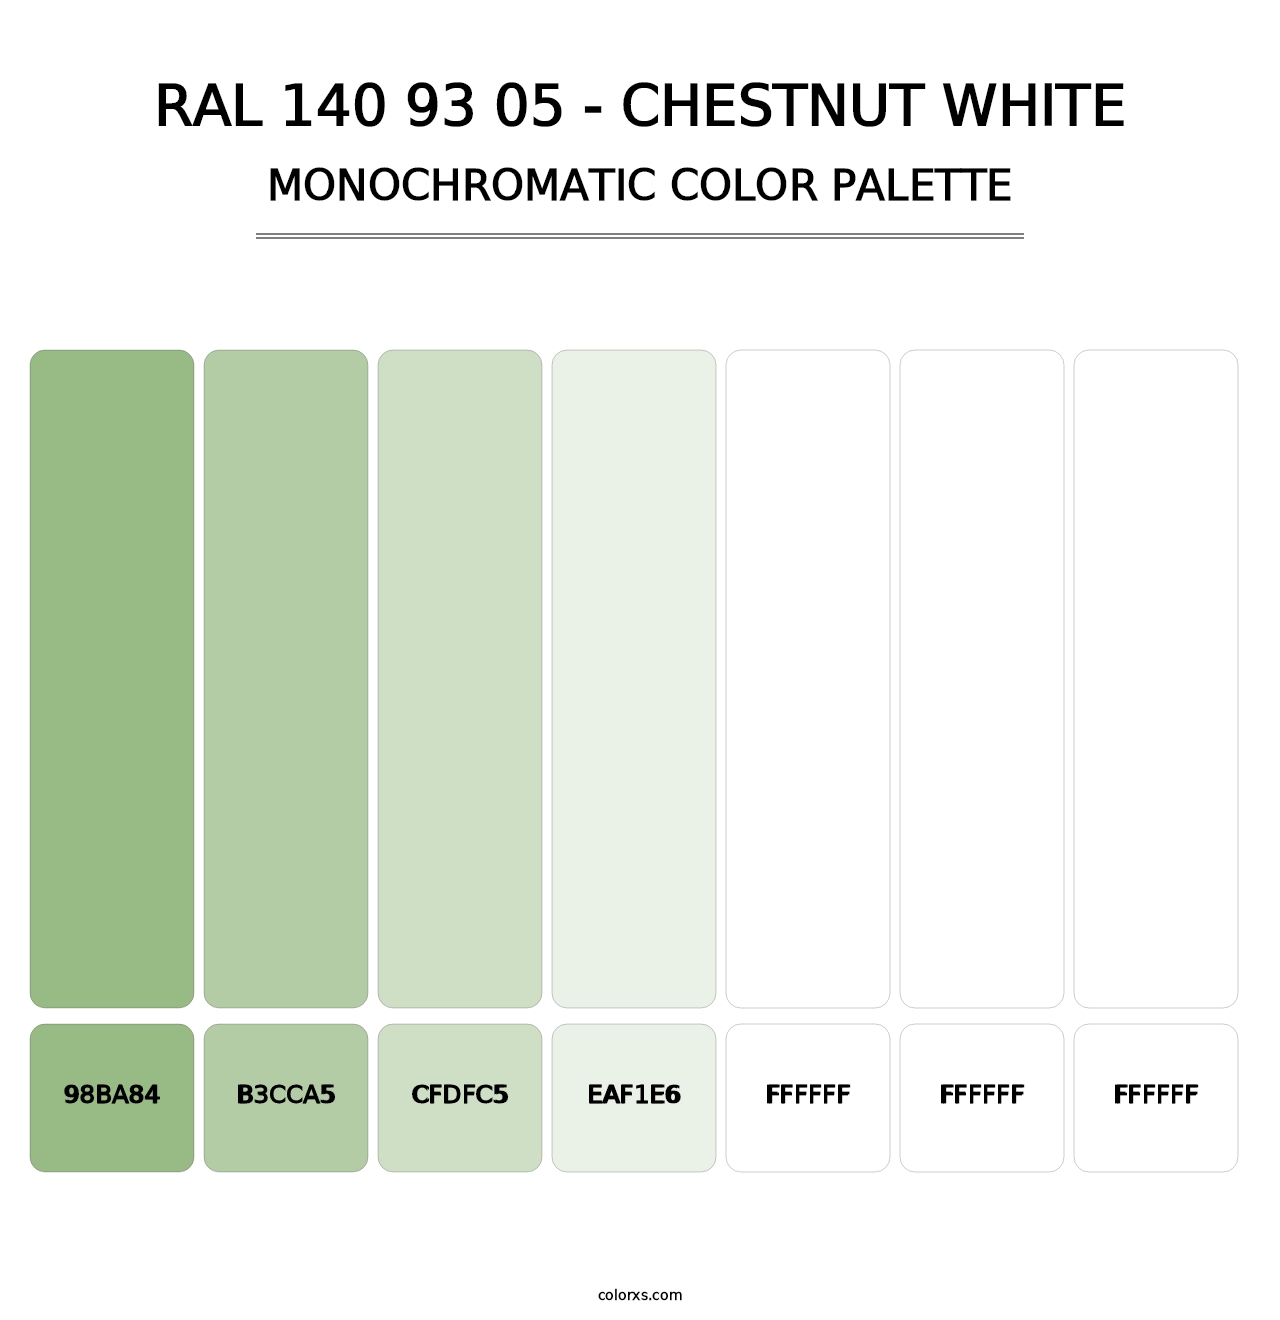 RAL 140 93 05 - Chestnut White - Monochromatic Color Palette